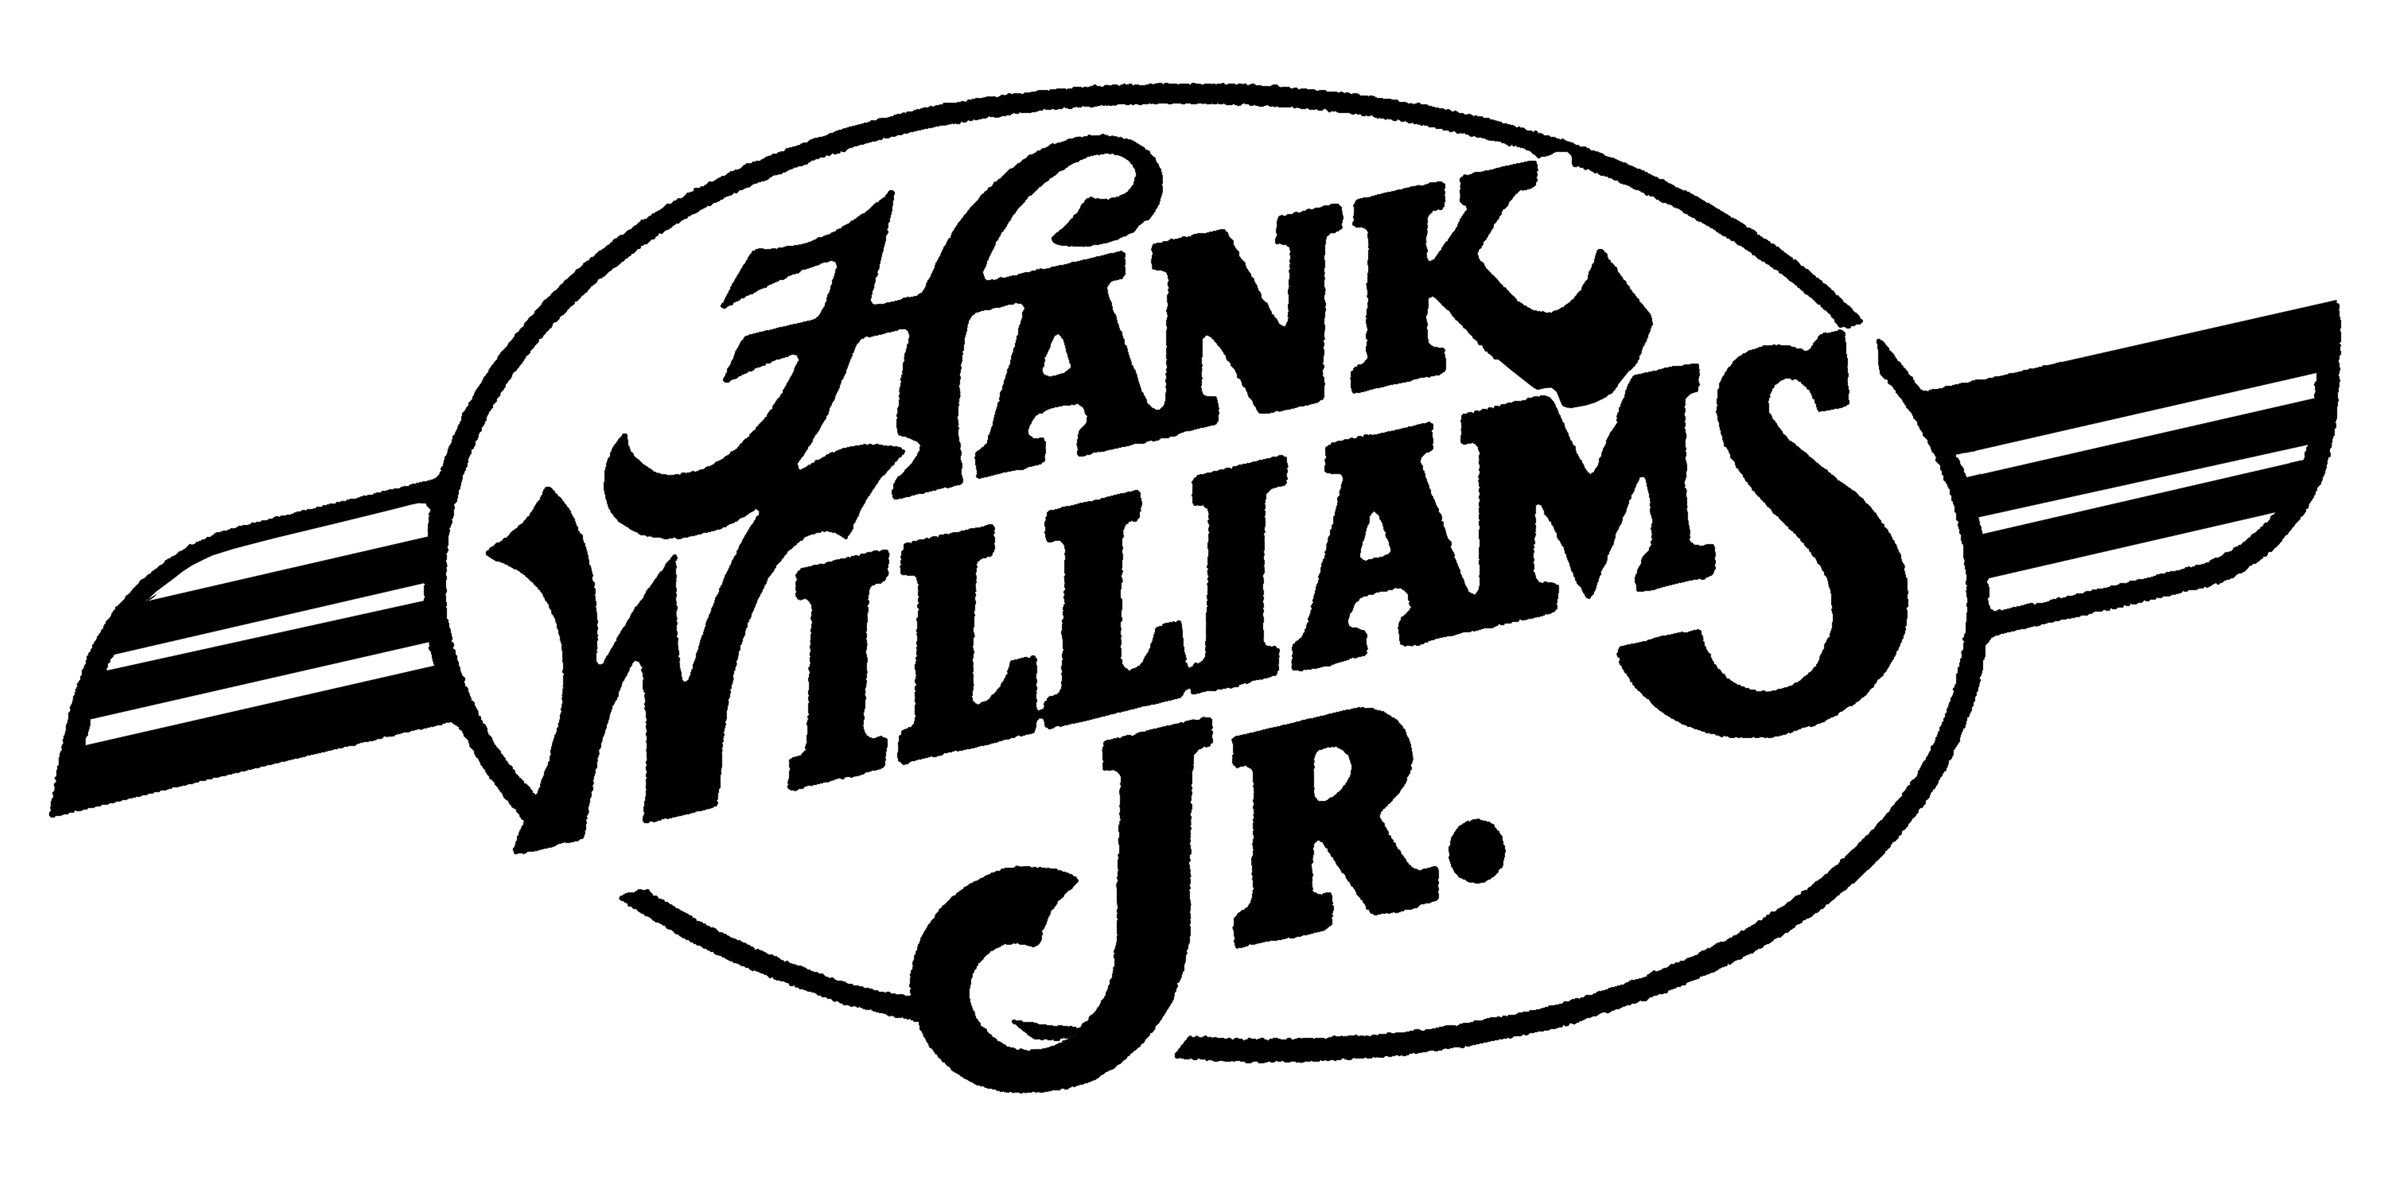 Hank Williams Wallpaper. Kimberly Williams Paisley Wallpaper, Sherwin Williams Wallpaper Books And Zelda Williams Wallpaper